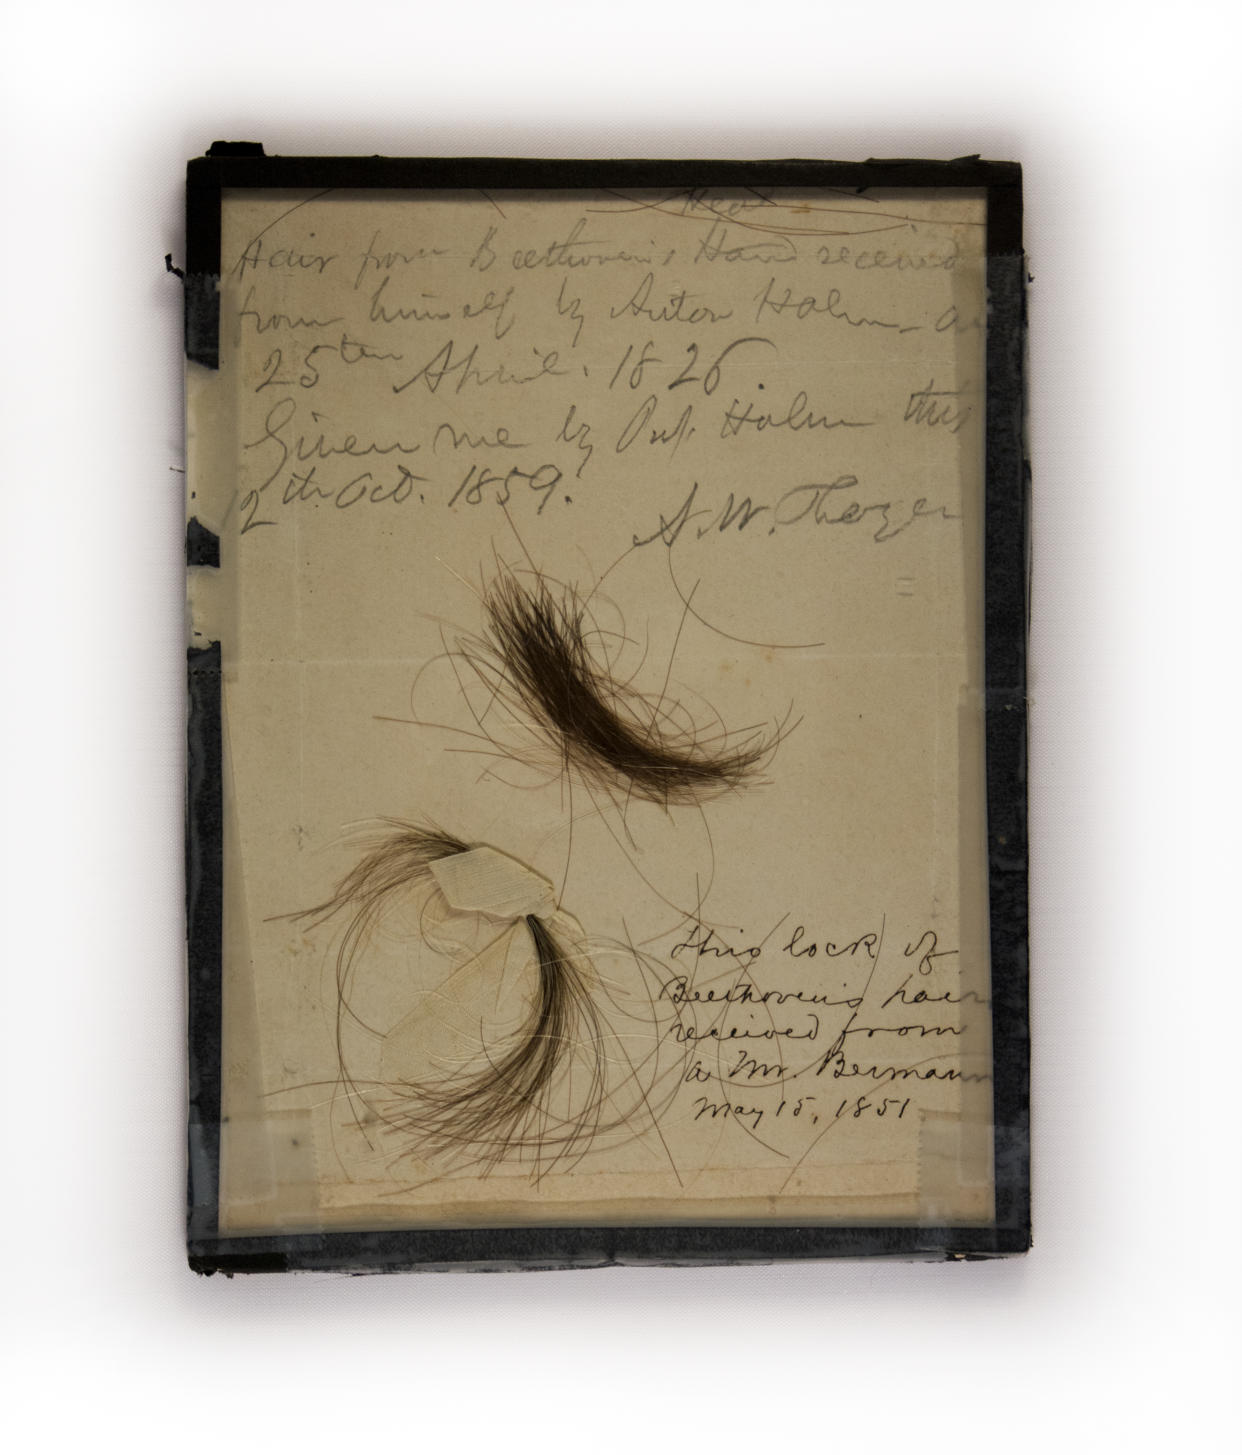 Dos mechones autentificados de pelo de Beethoven recogidos por Alexander Thayer, en los que se encontraron niveles asombrosos de plomo por gramo de pelo. (Kevin Brown/The New York Times)